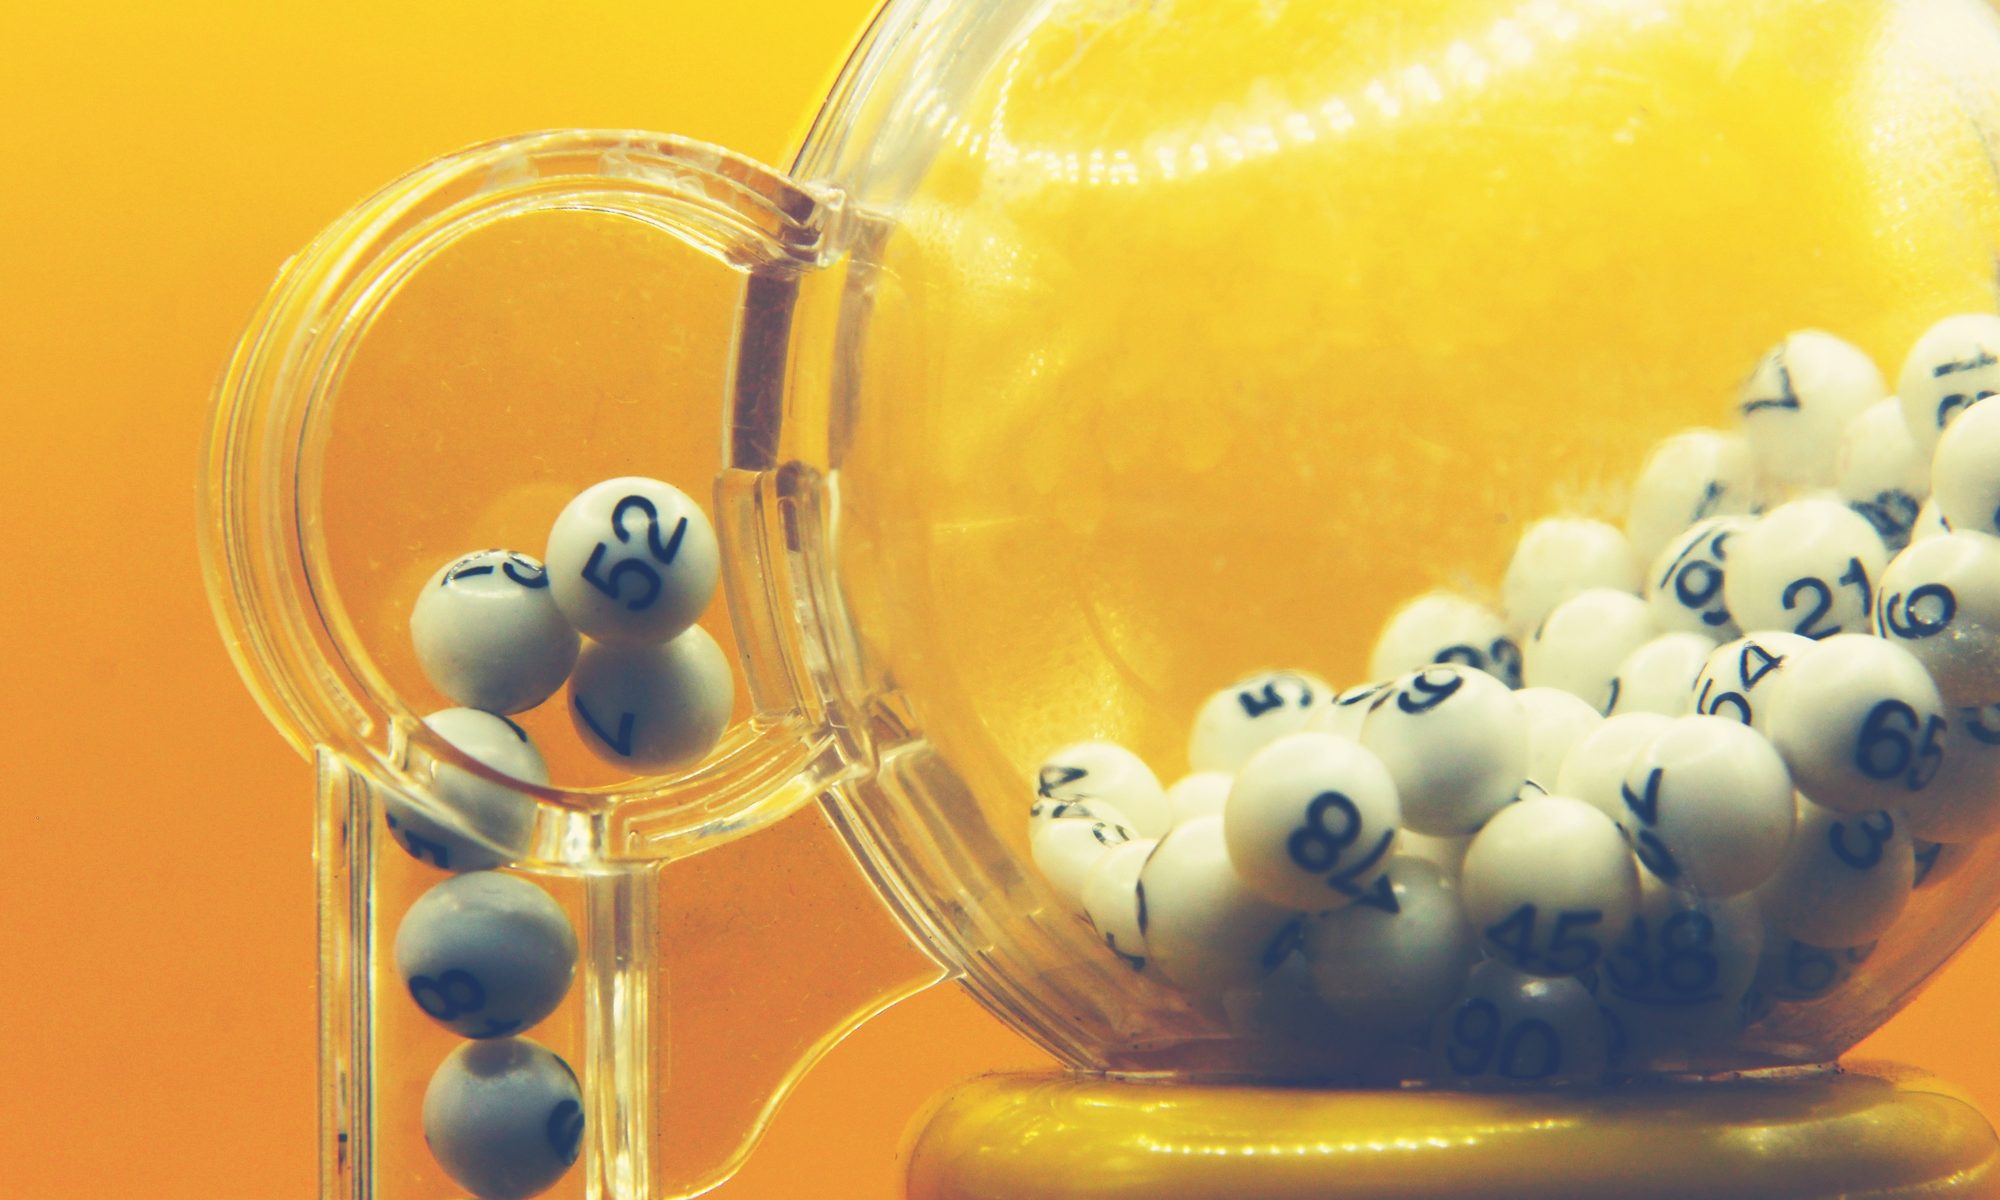 photograph of bingo balls in a lottery machine